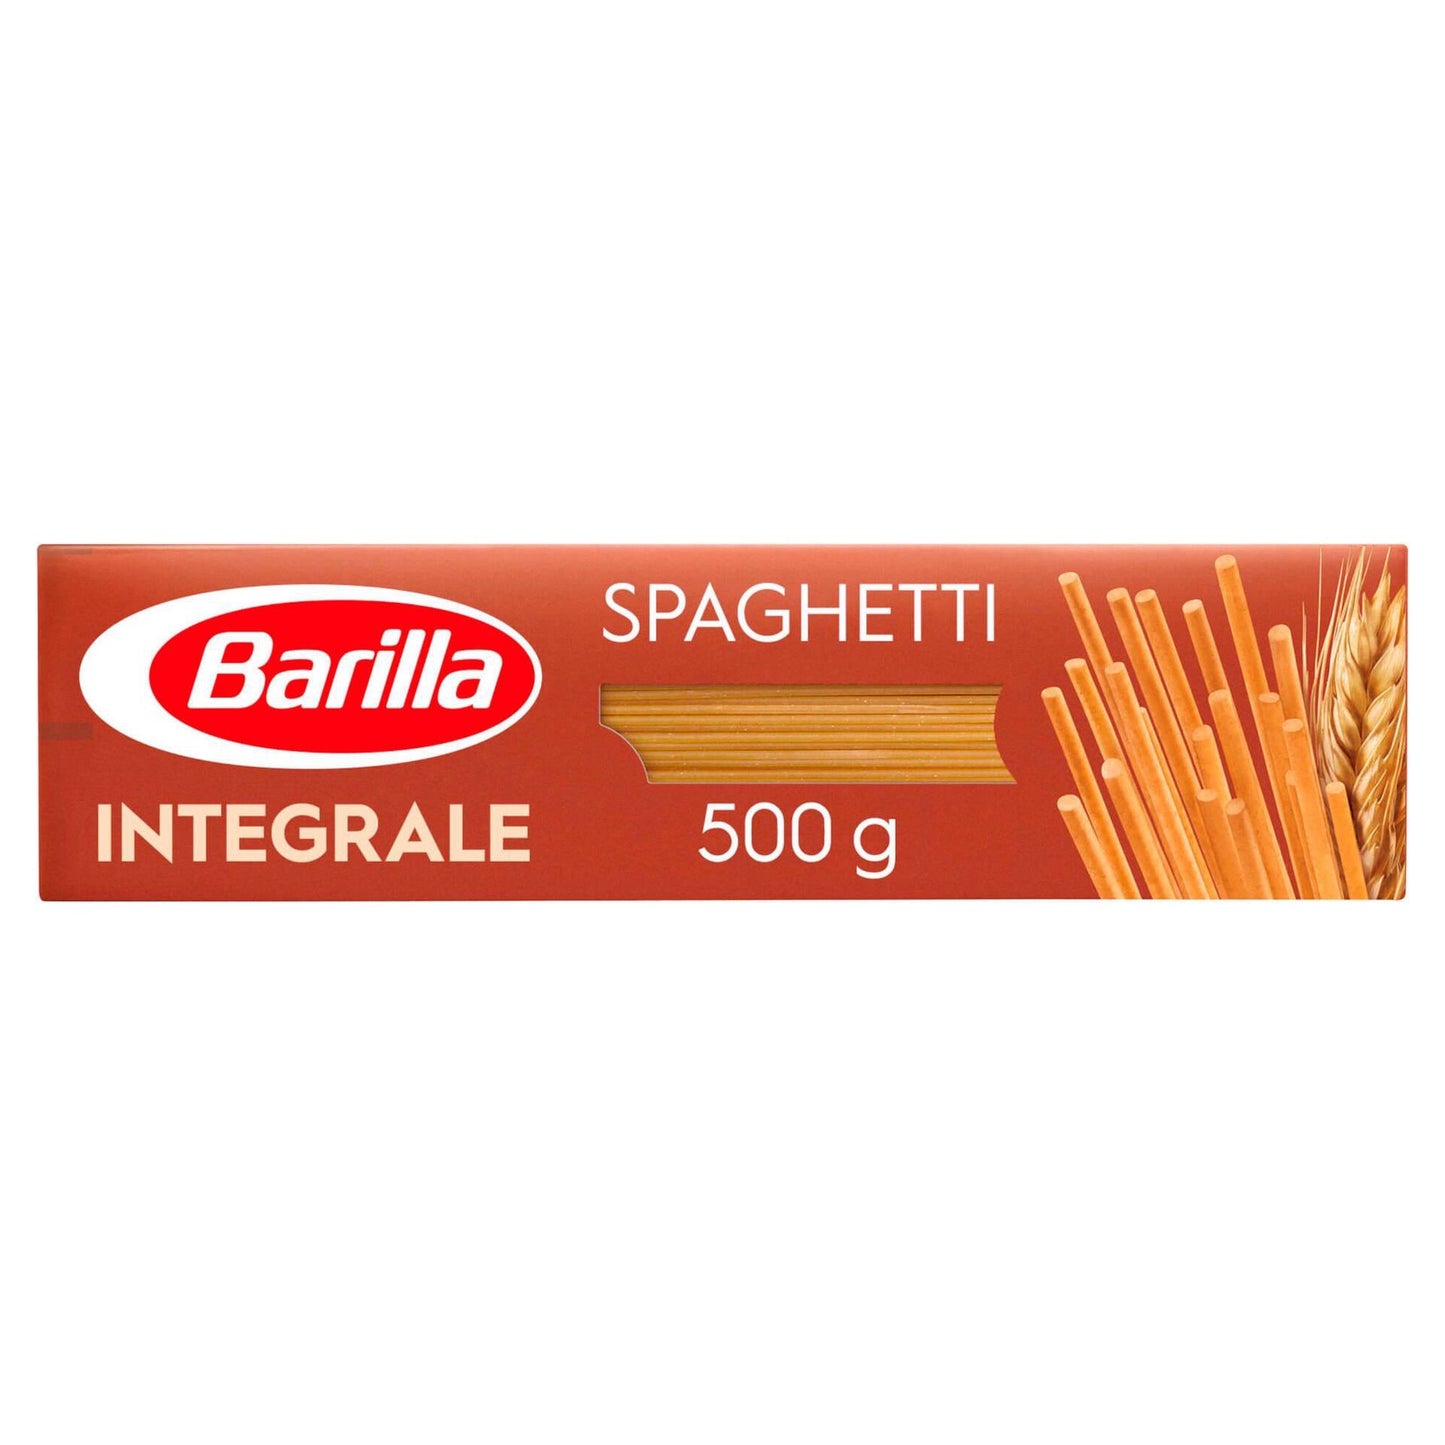 Whole Wheat Spaghetti Barilla 500g